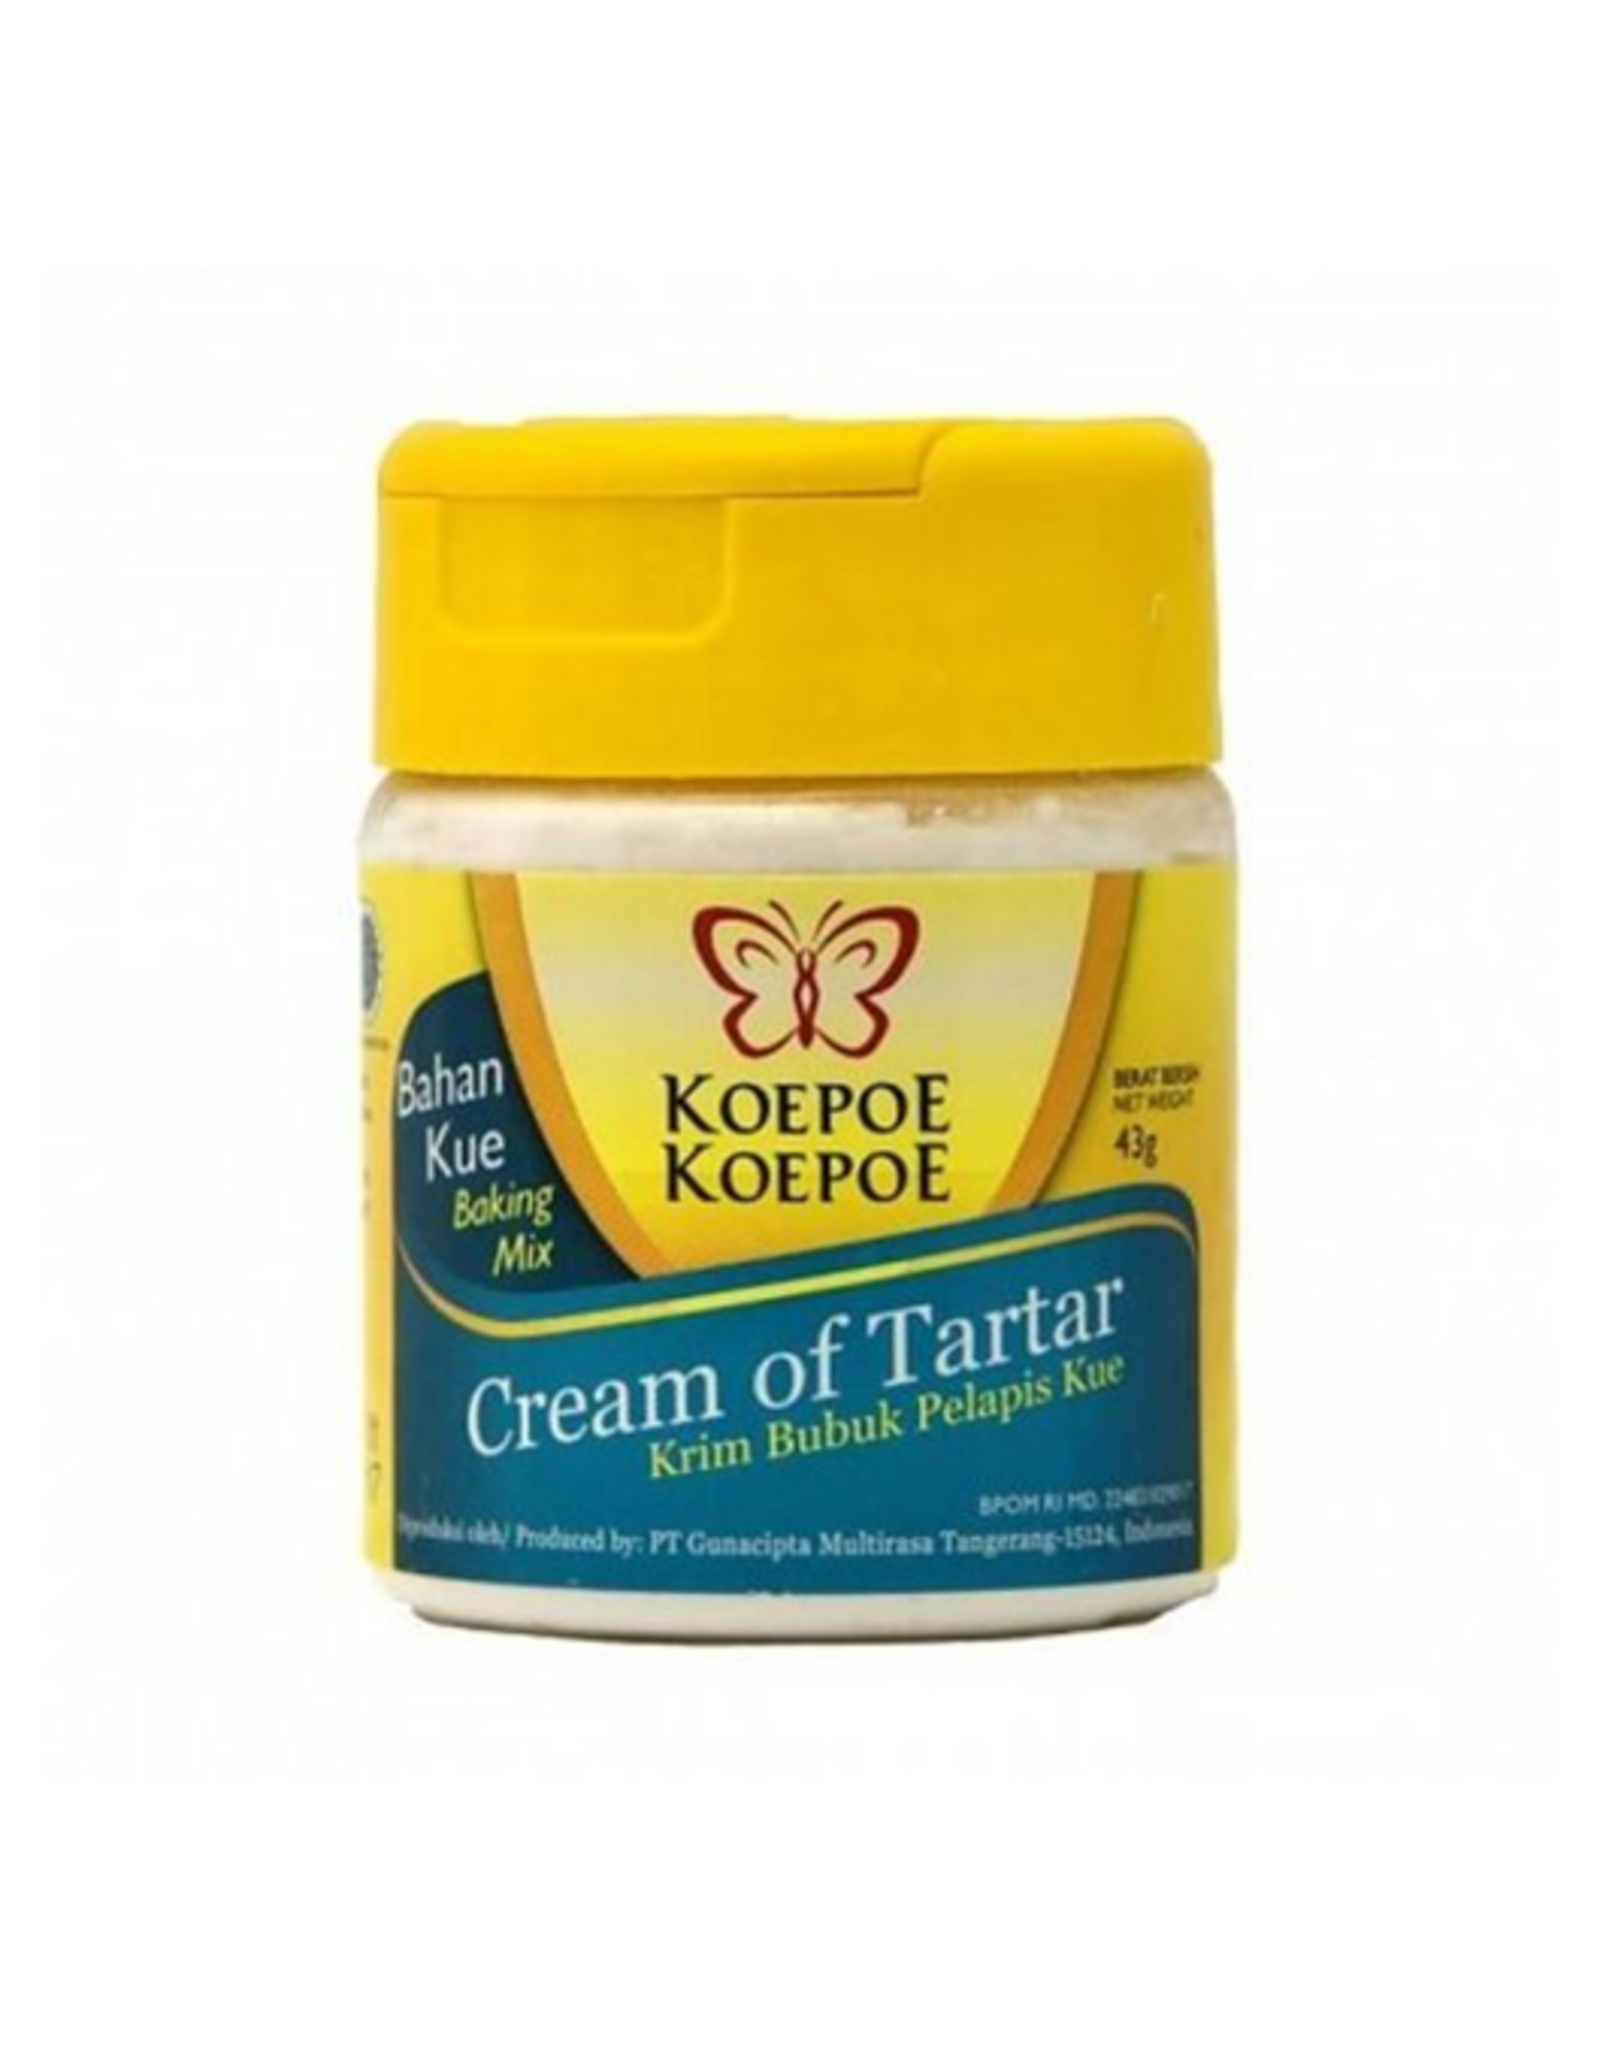 Koepoe Koepoe Cream of Tartar